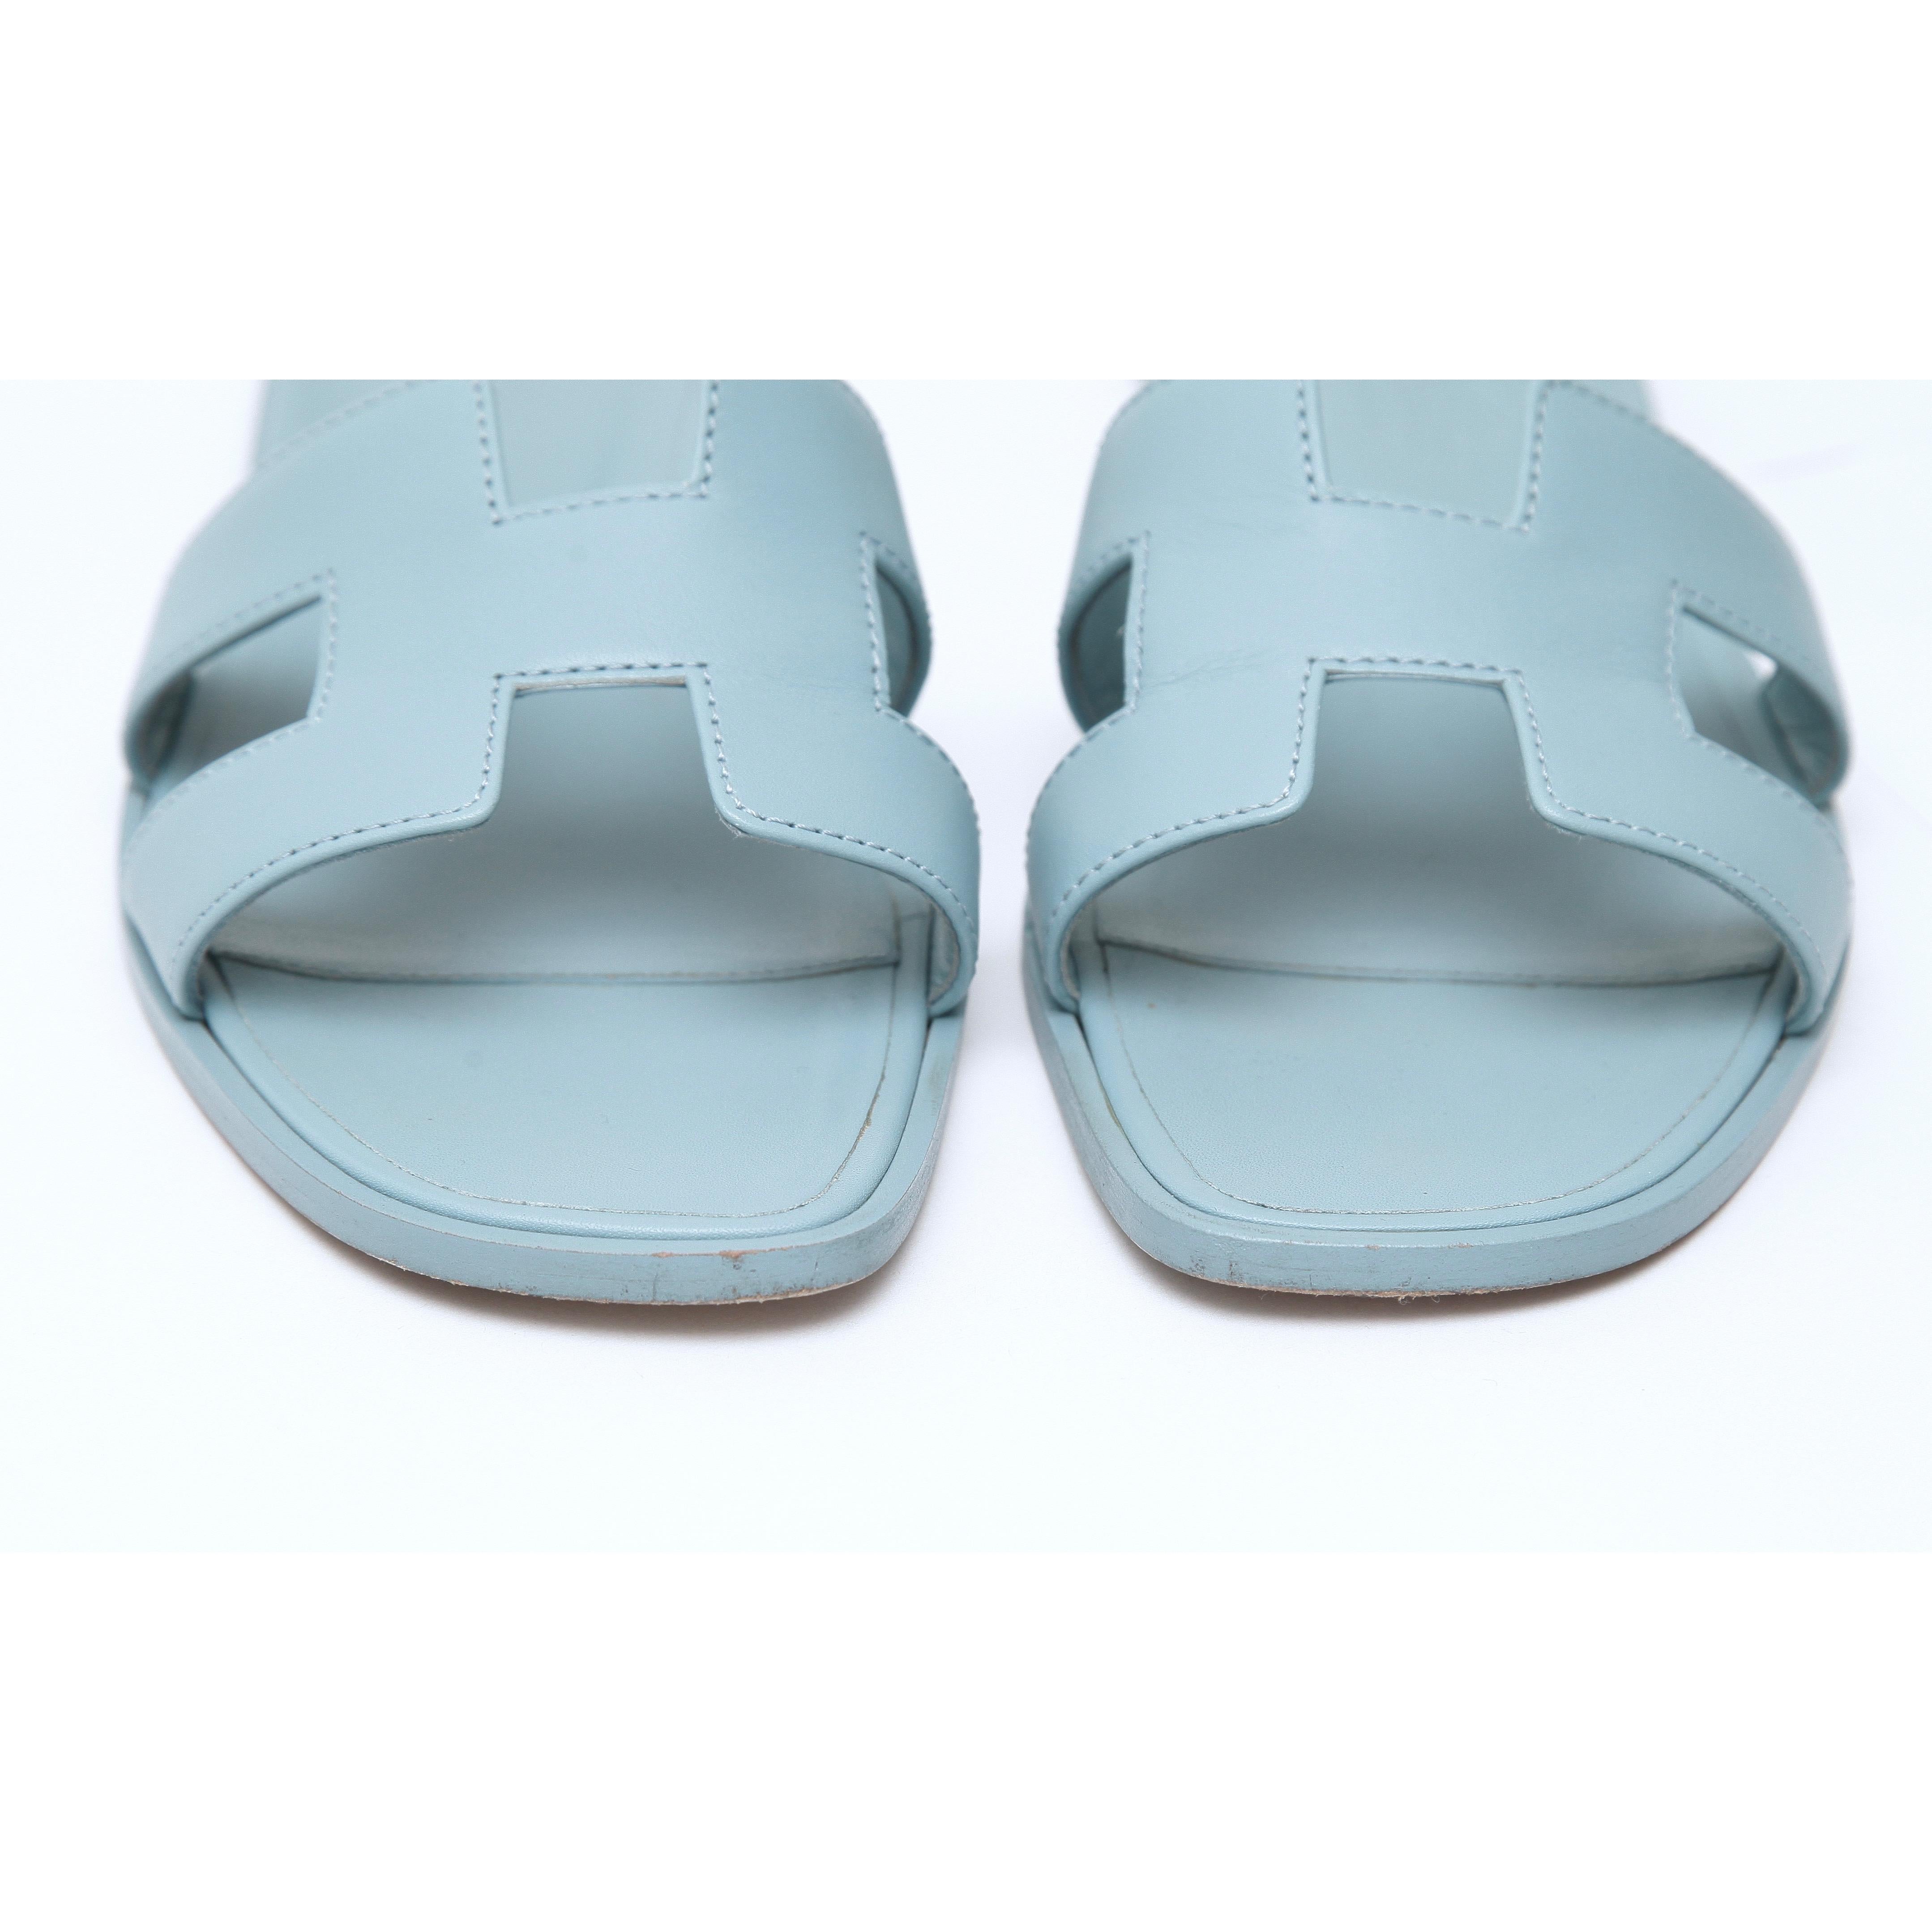 Women's HERMES Blue Leather Slides ORAN Sandals Flat Mule Slip On Shoes Sz 38